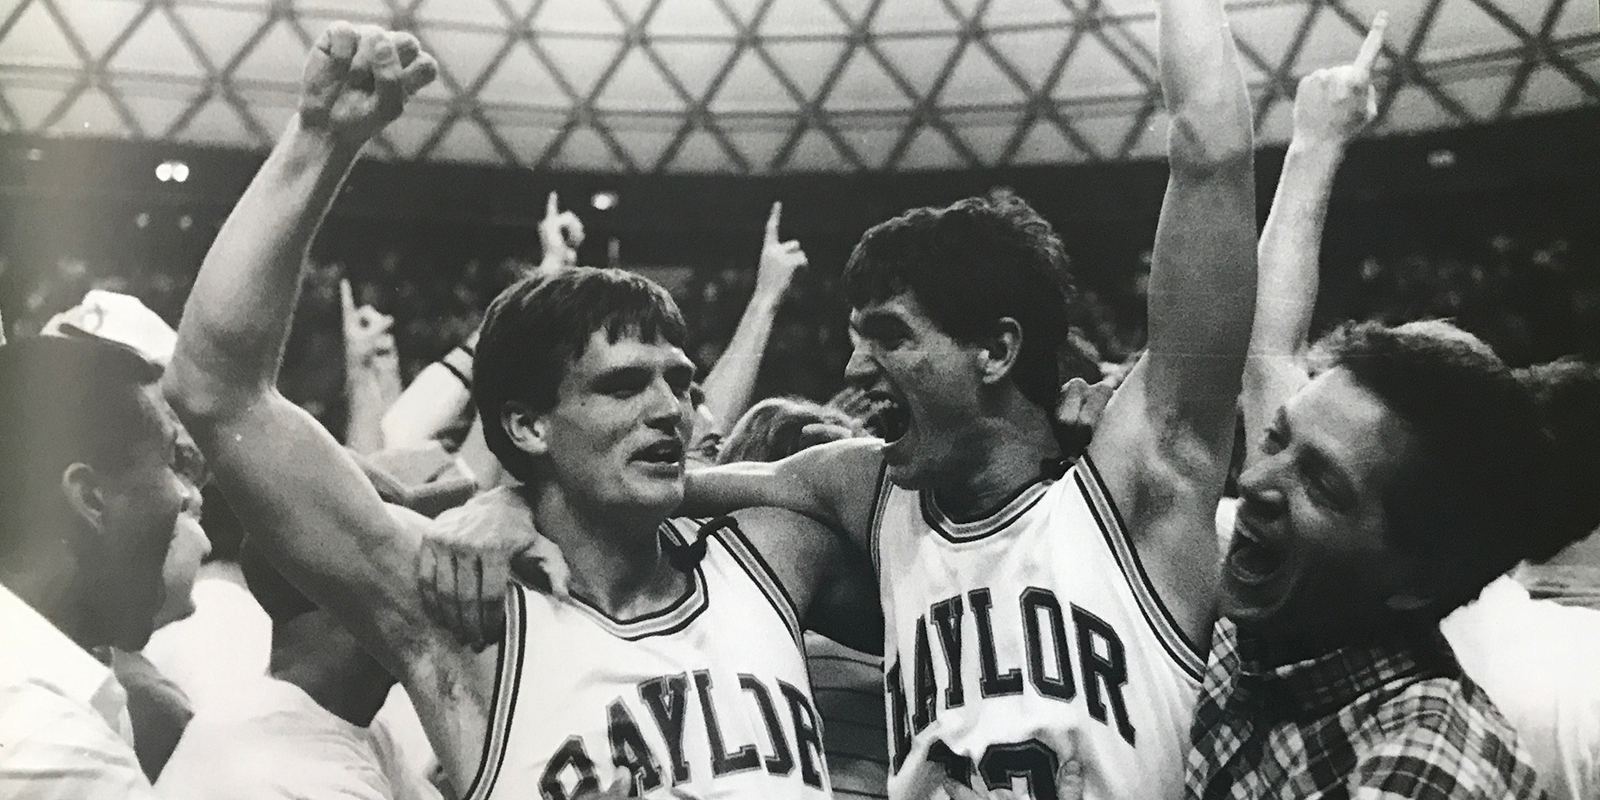 Baylor men celebrate a win over Arkansas, 1990